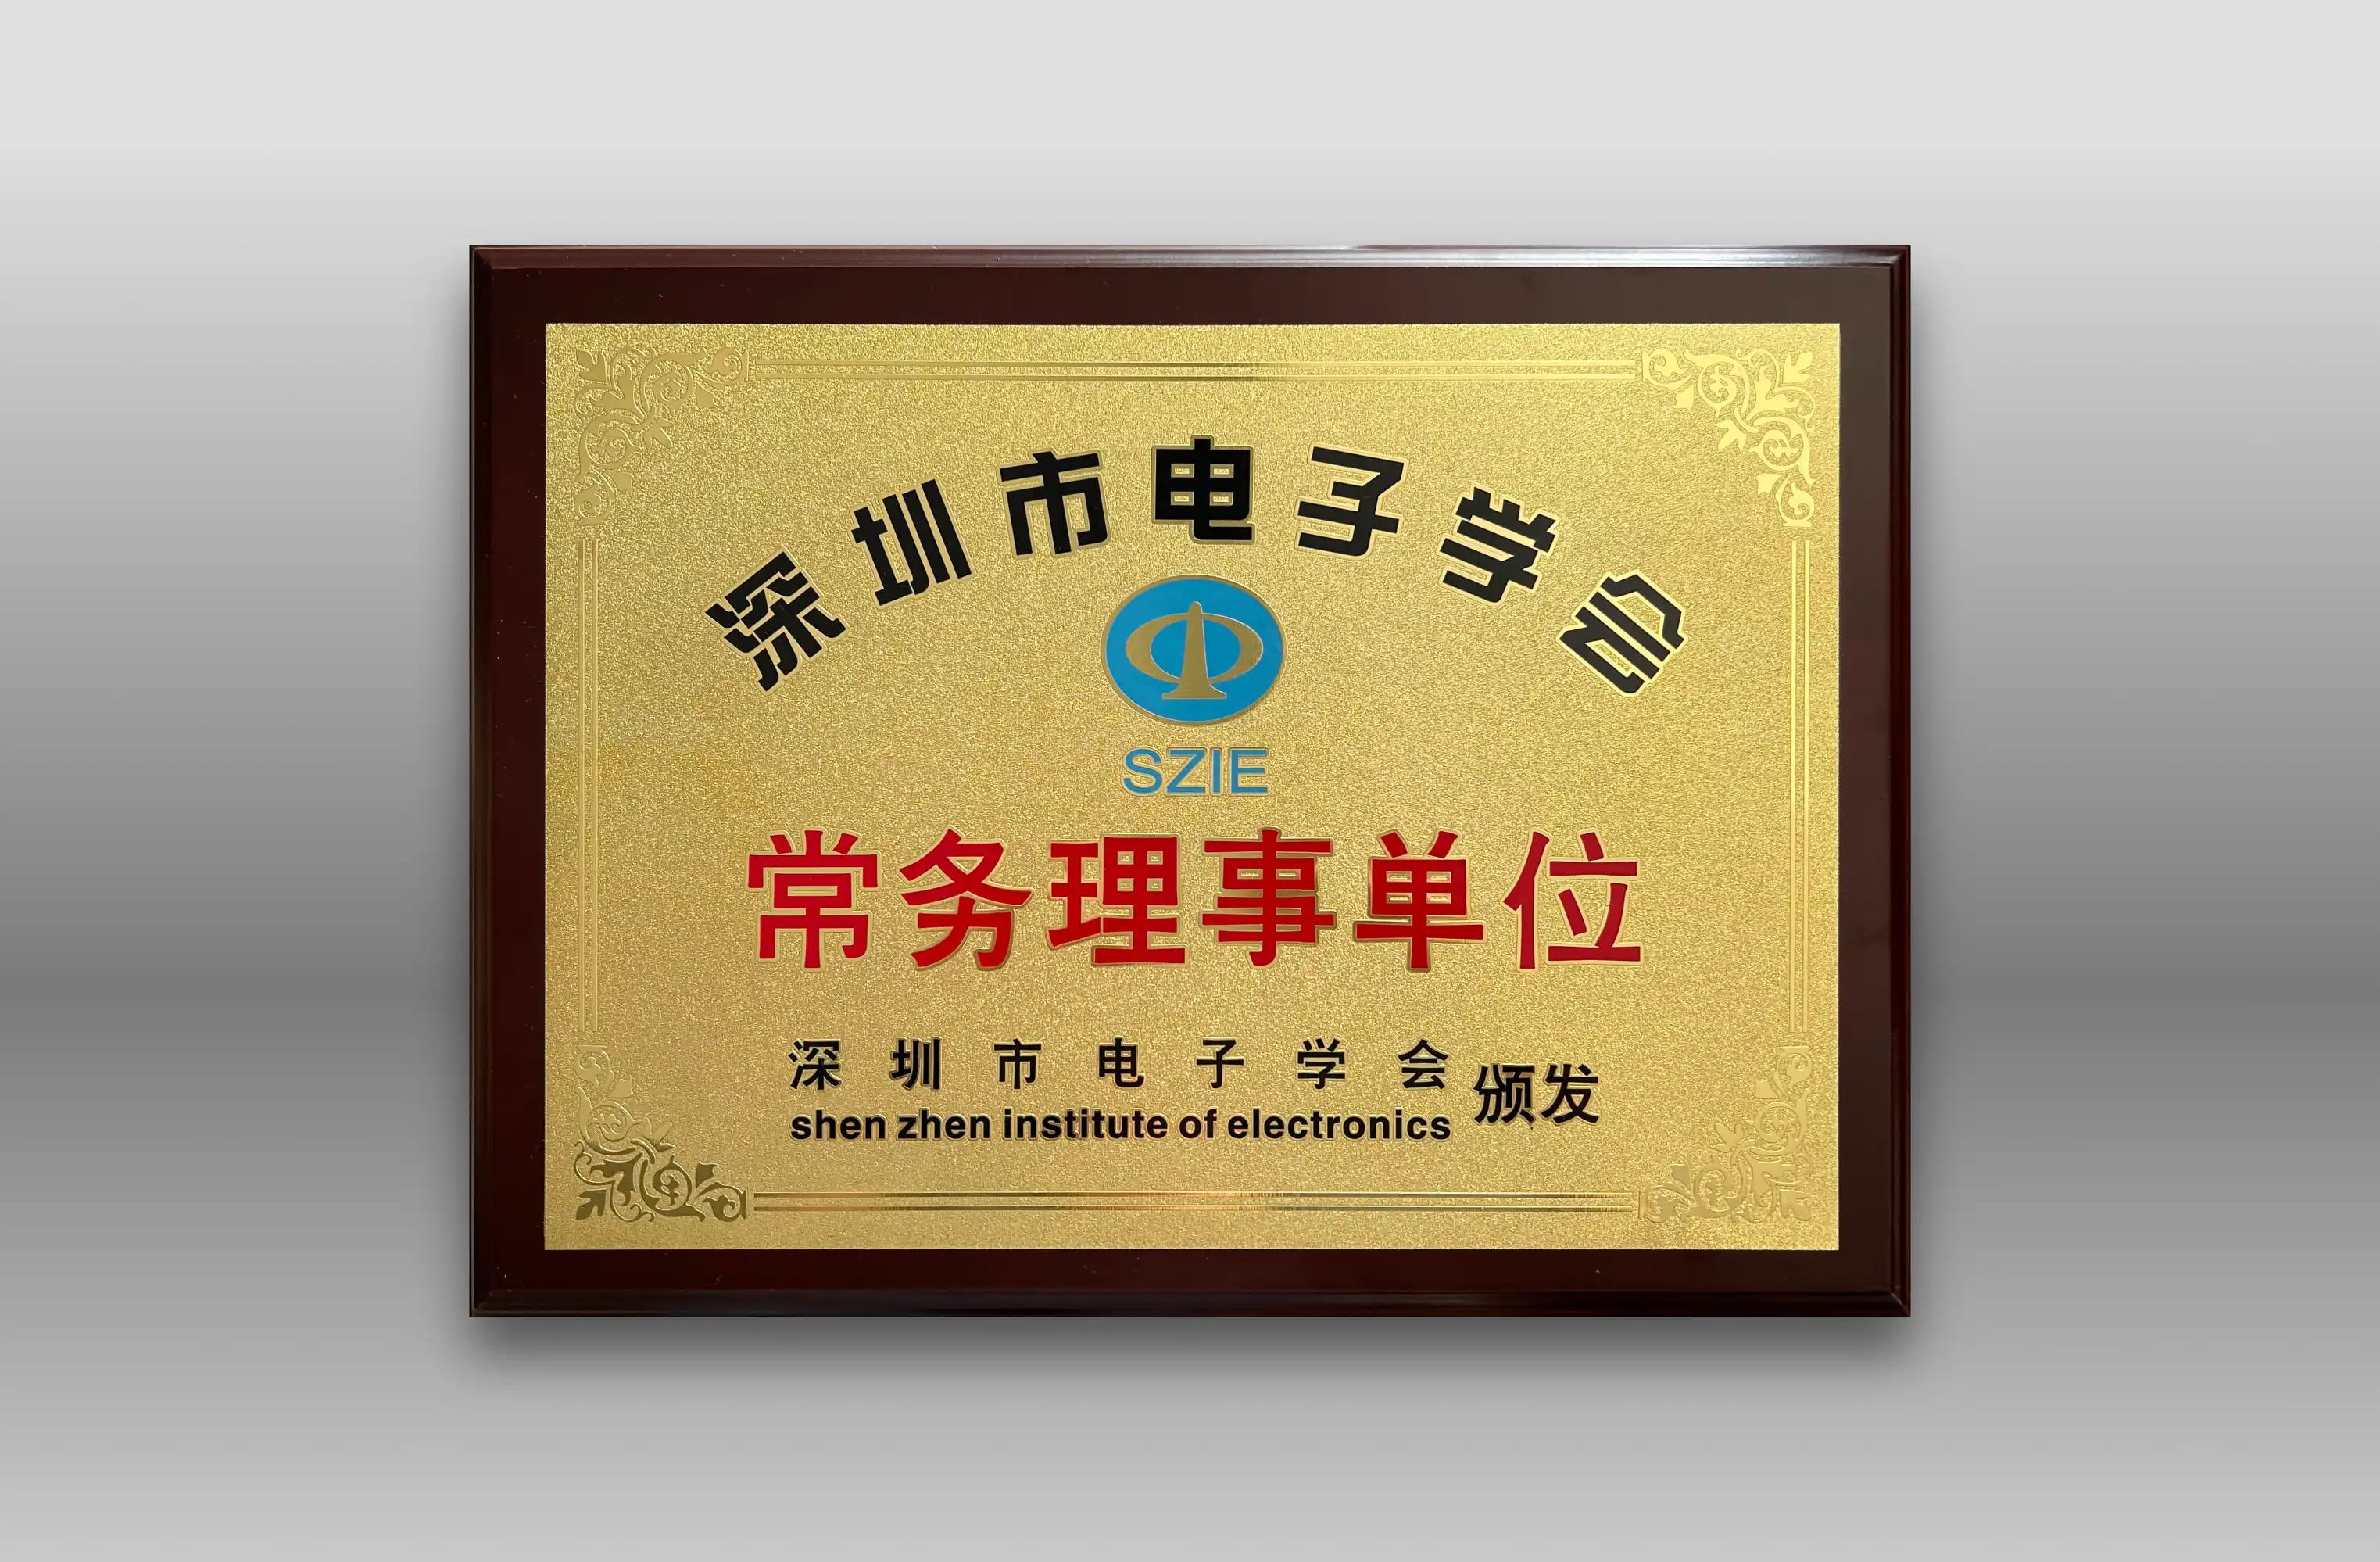 Executive Director Unit of Shenzhen Electronics Society